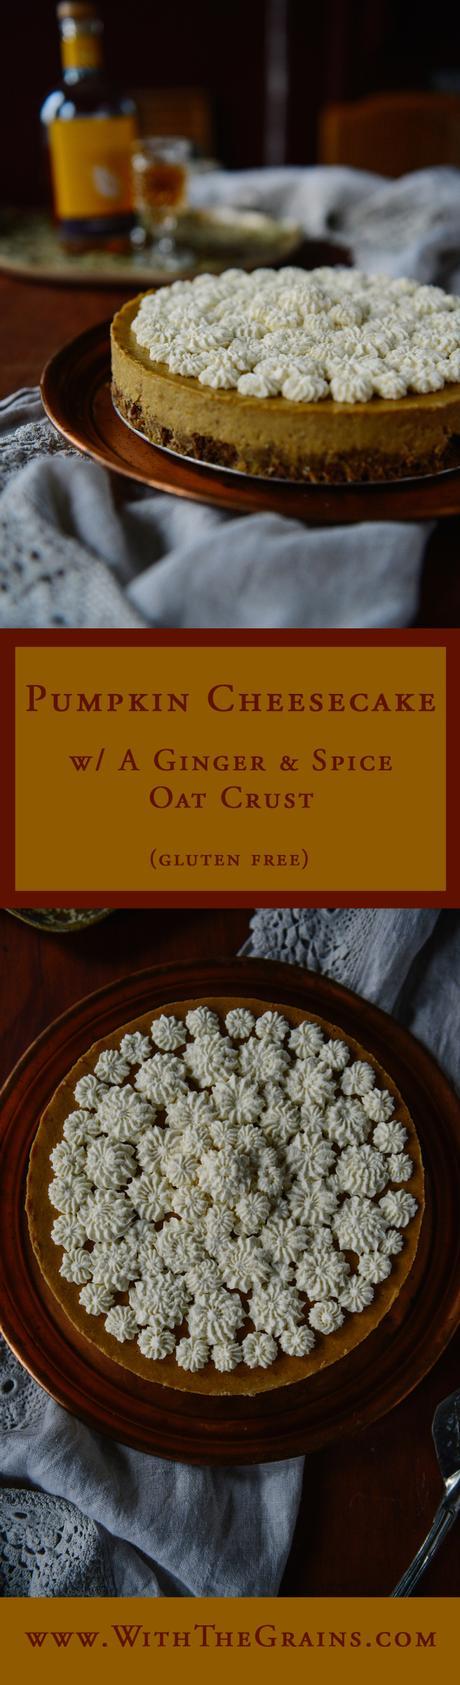 Pumpkin Cheesecake w/ Ginger & Spice Oat Crust // www.WithTheGrains.com